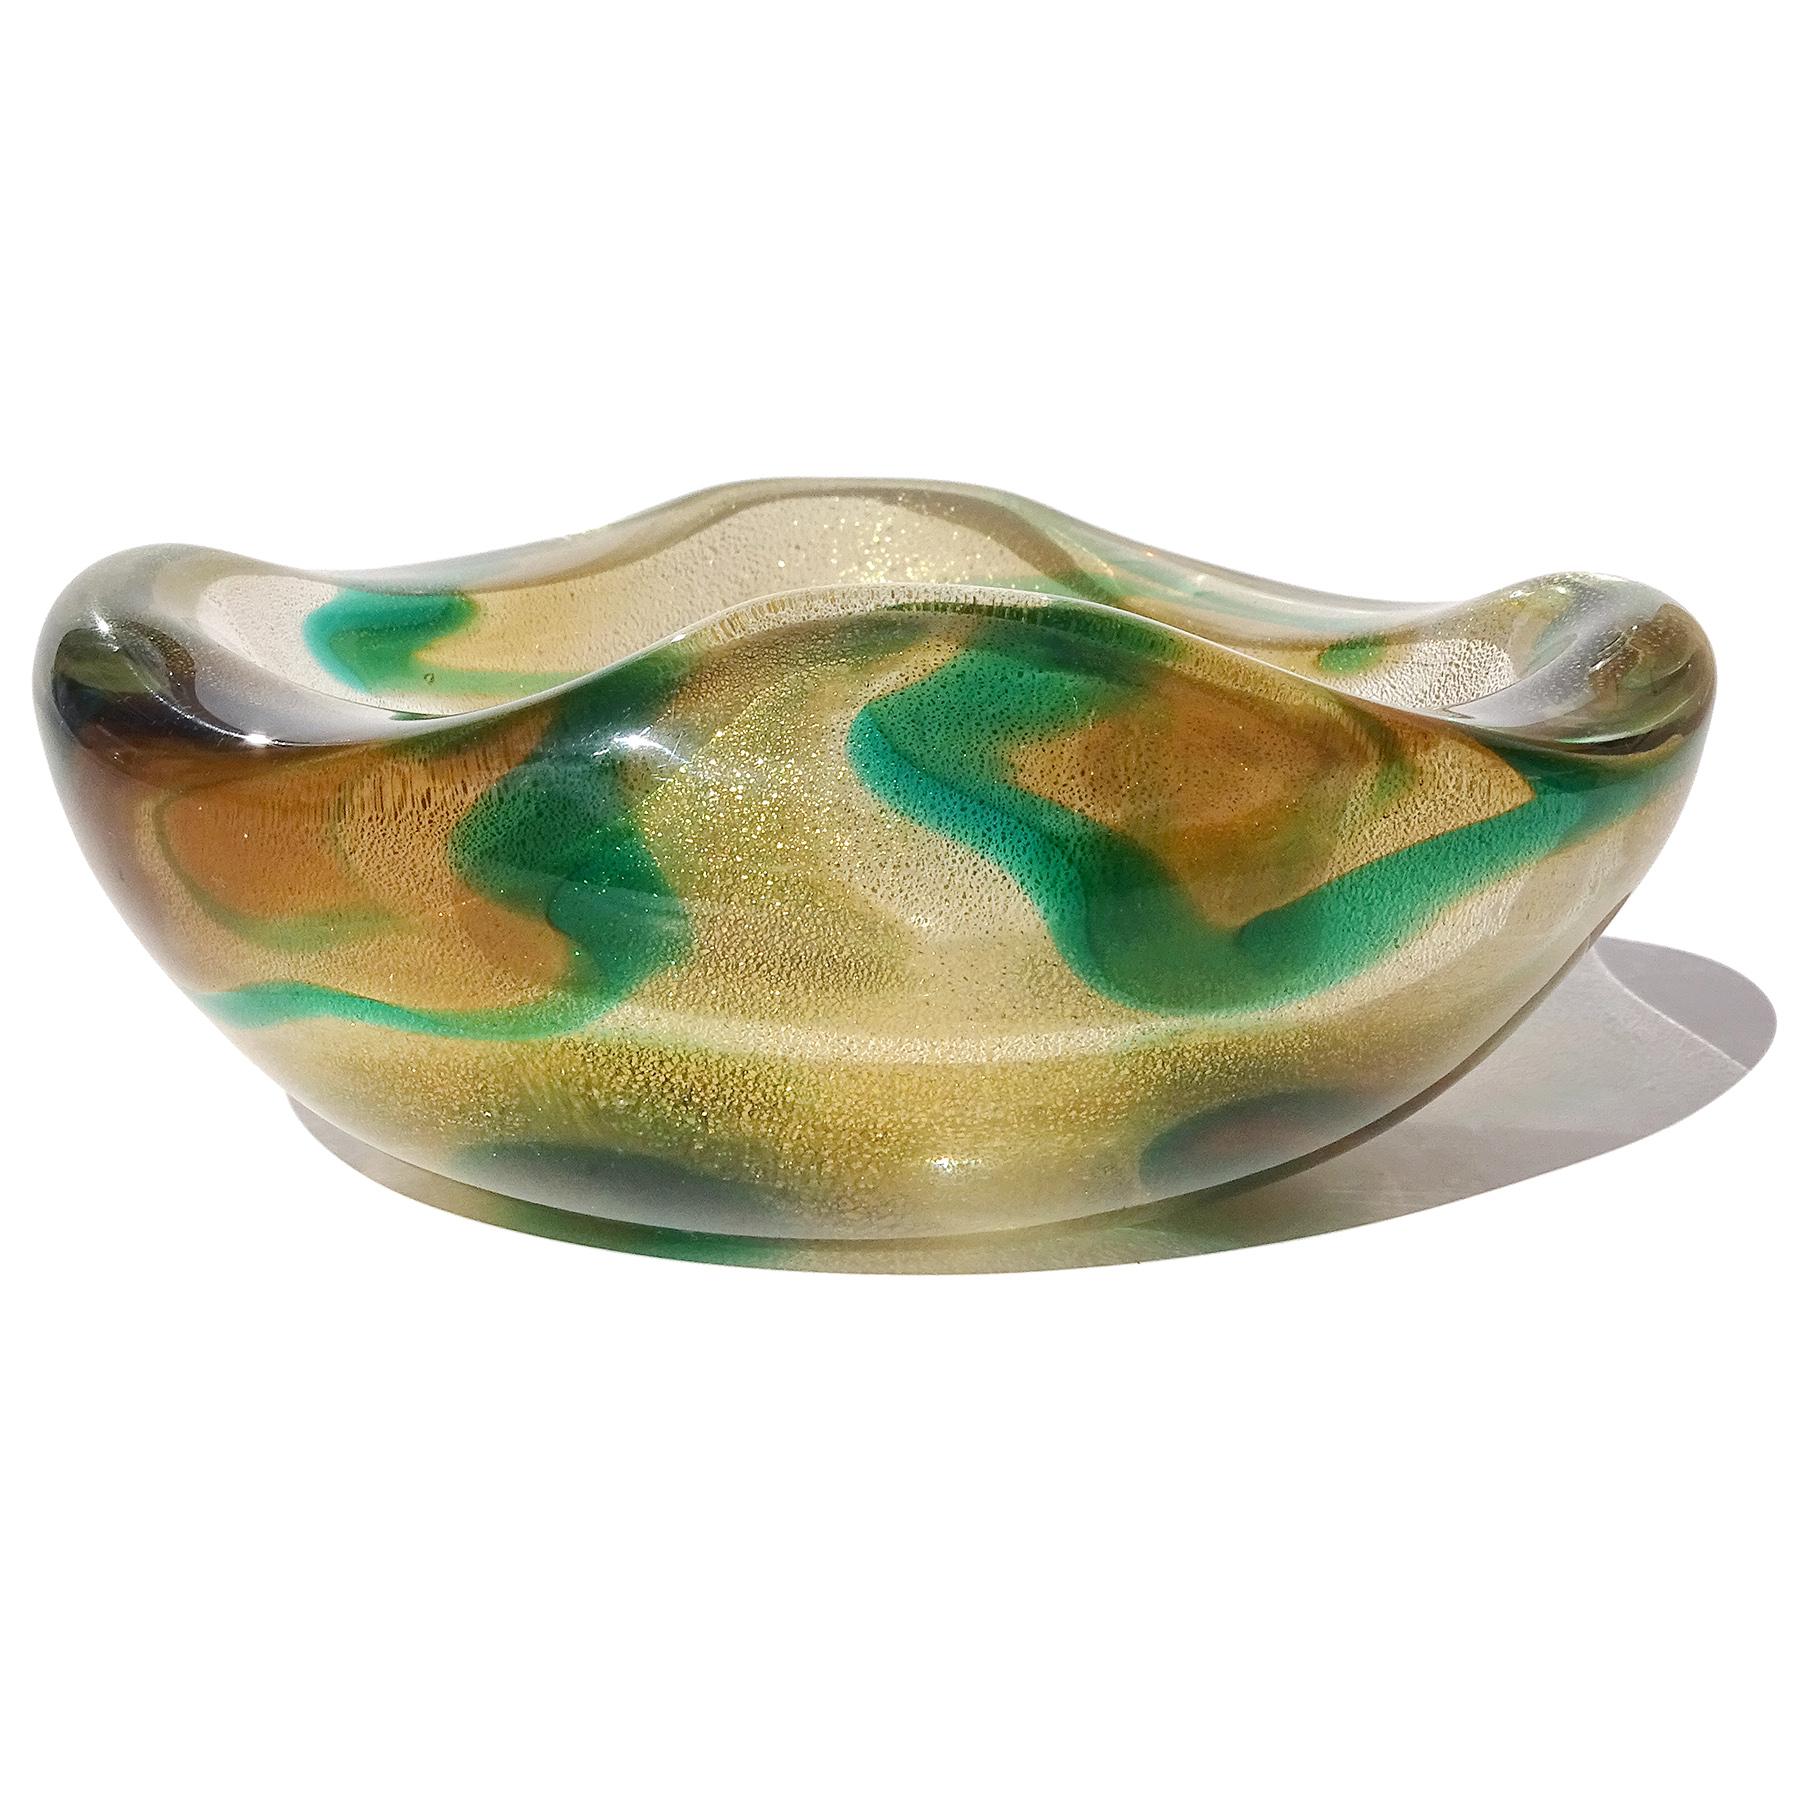 Seguso Murano 1952 Macchia Ambra Verde Gold Flecks Italian Art Glass Bowl For Sale 1